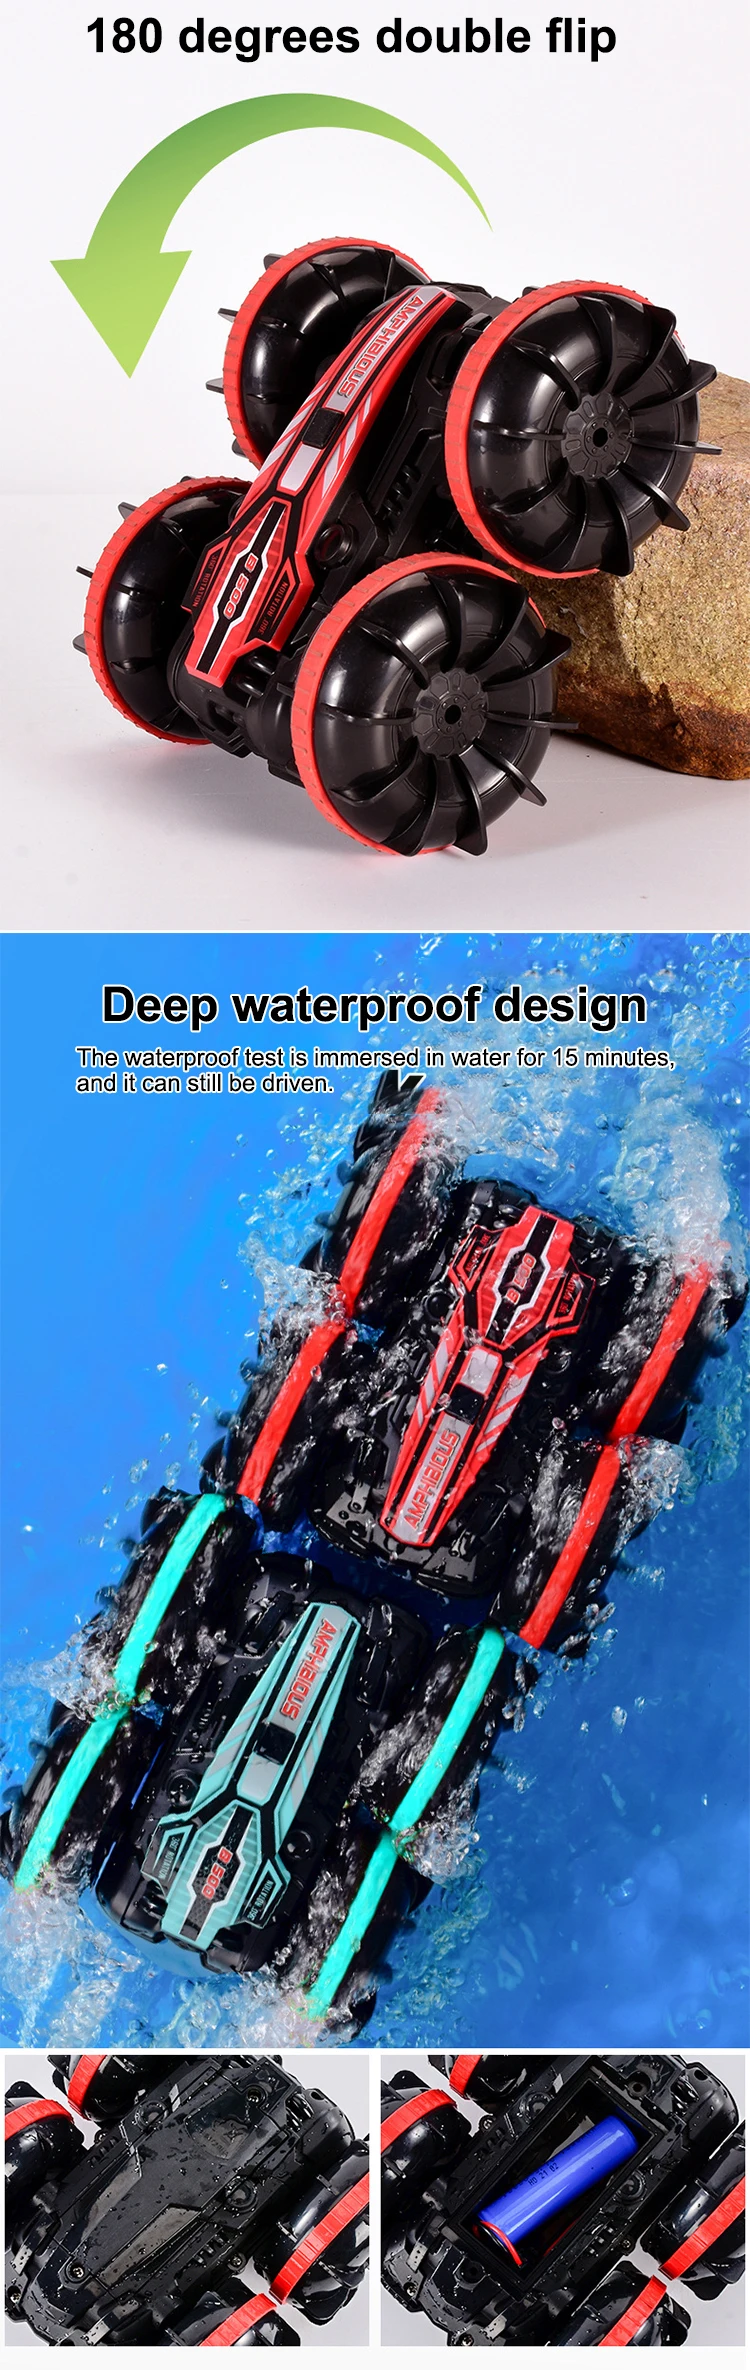 Amazon Sells 2.4ghz Gesture Sensing Control Amphibious Remote Control Car Off-Road Remote Control Boat Swimming Pool Toys